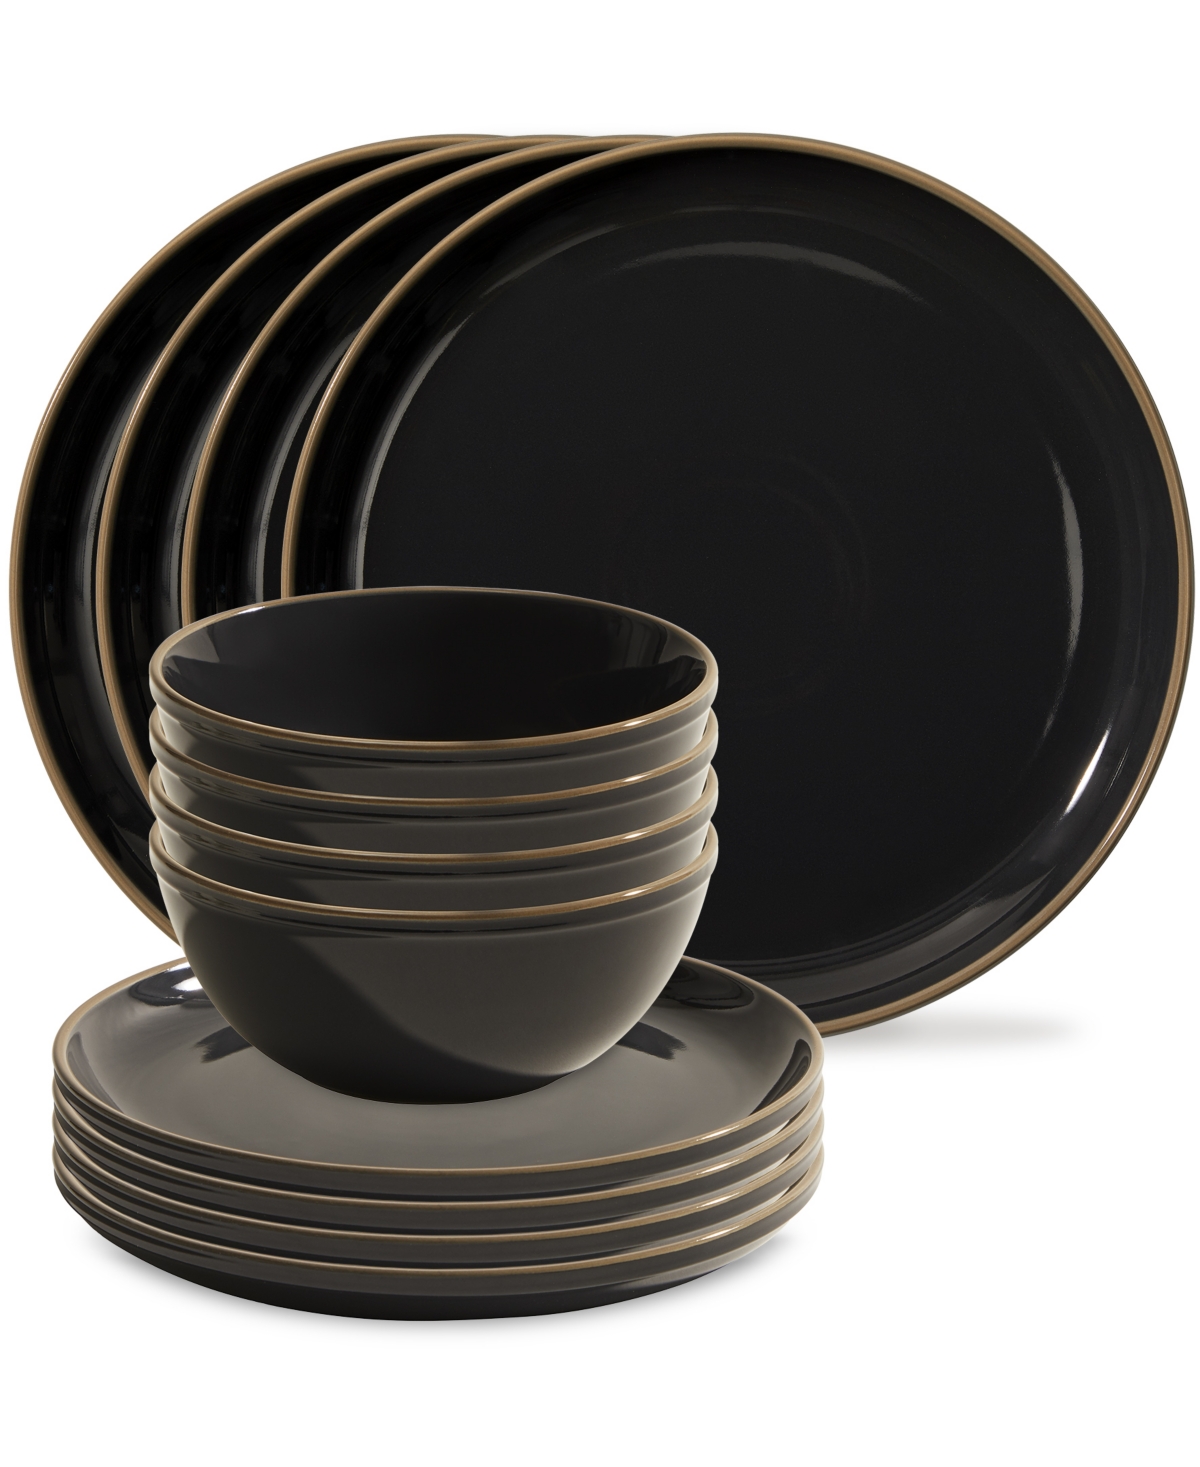 Corelle Veranda 16-Piece Dinnerware Set, Service for 4 - Macy's